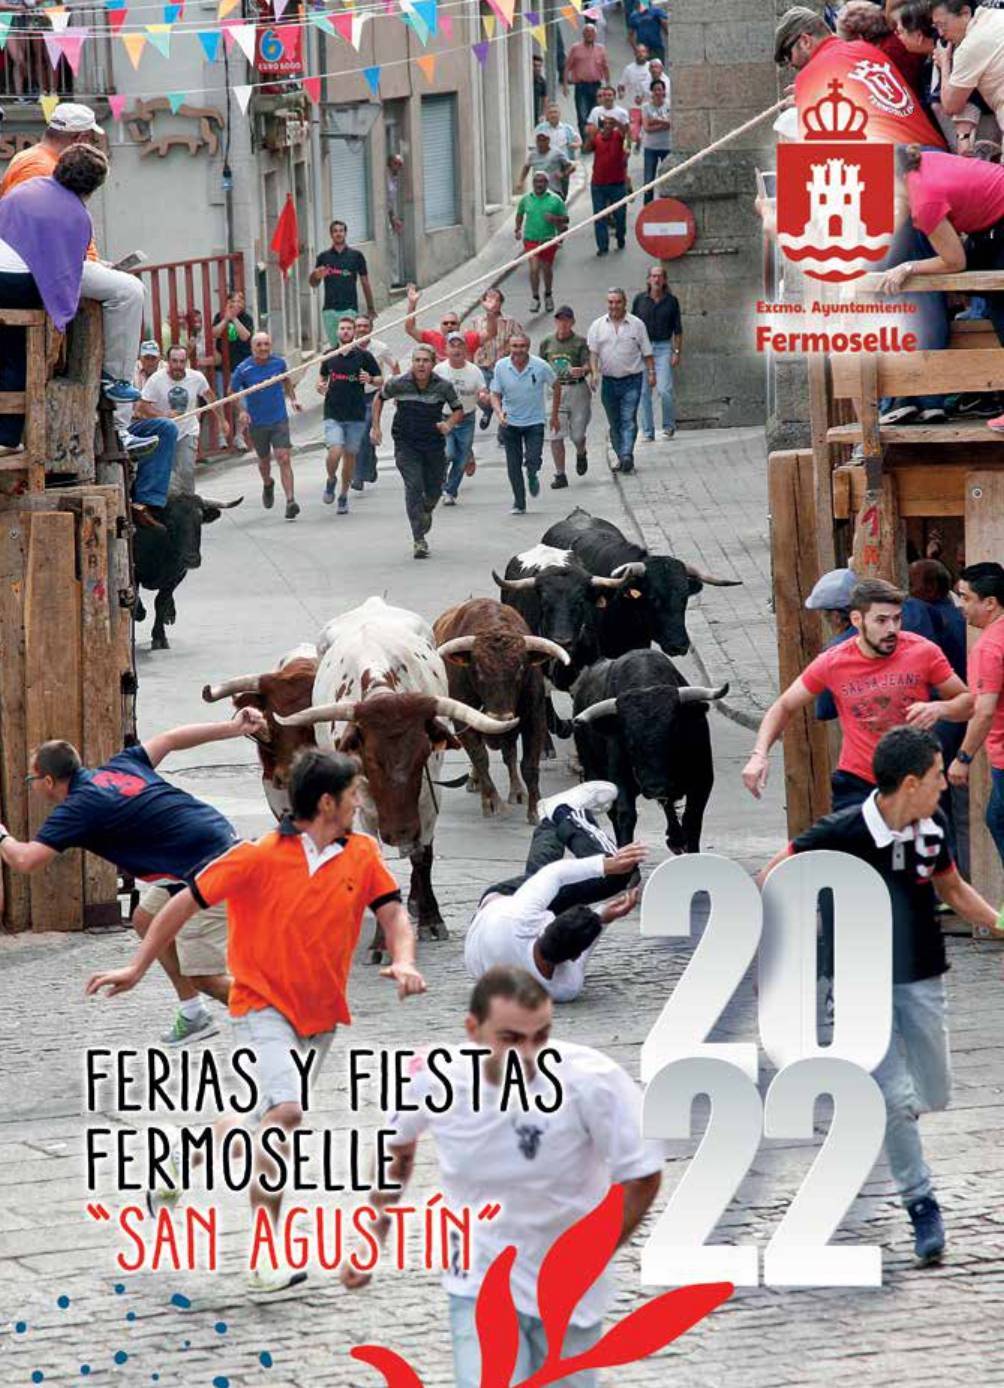 Ferias y fiestas de San Agustín (2022) - Fermoselle (Zamora) 1